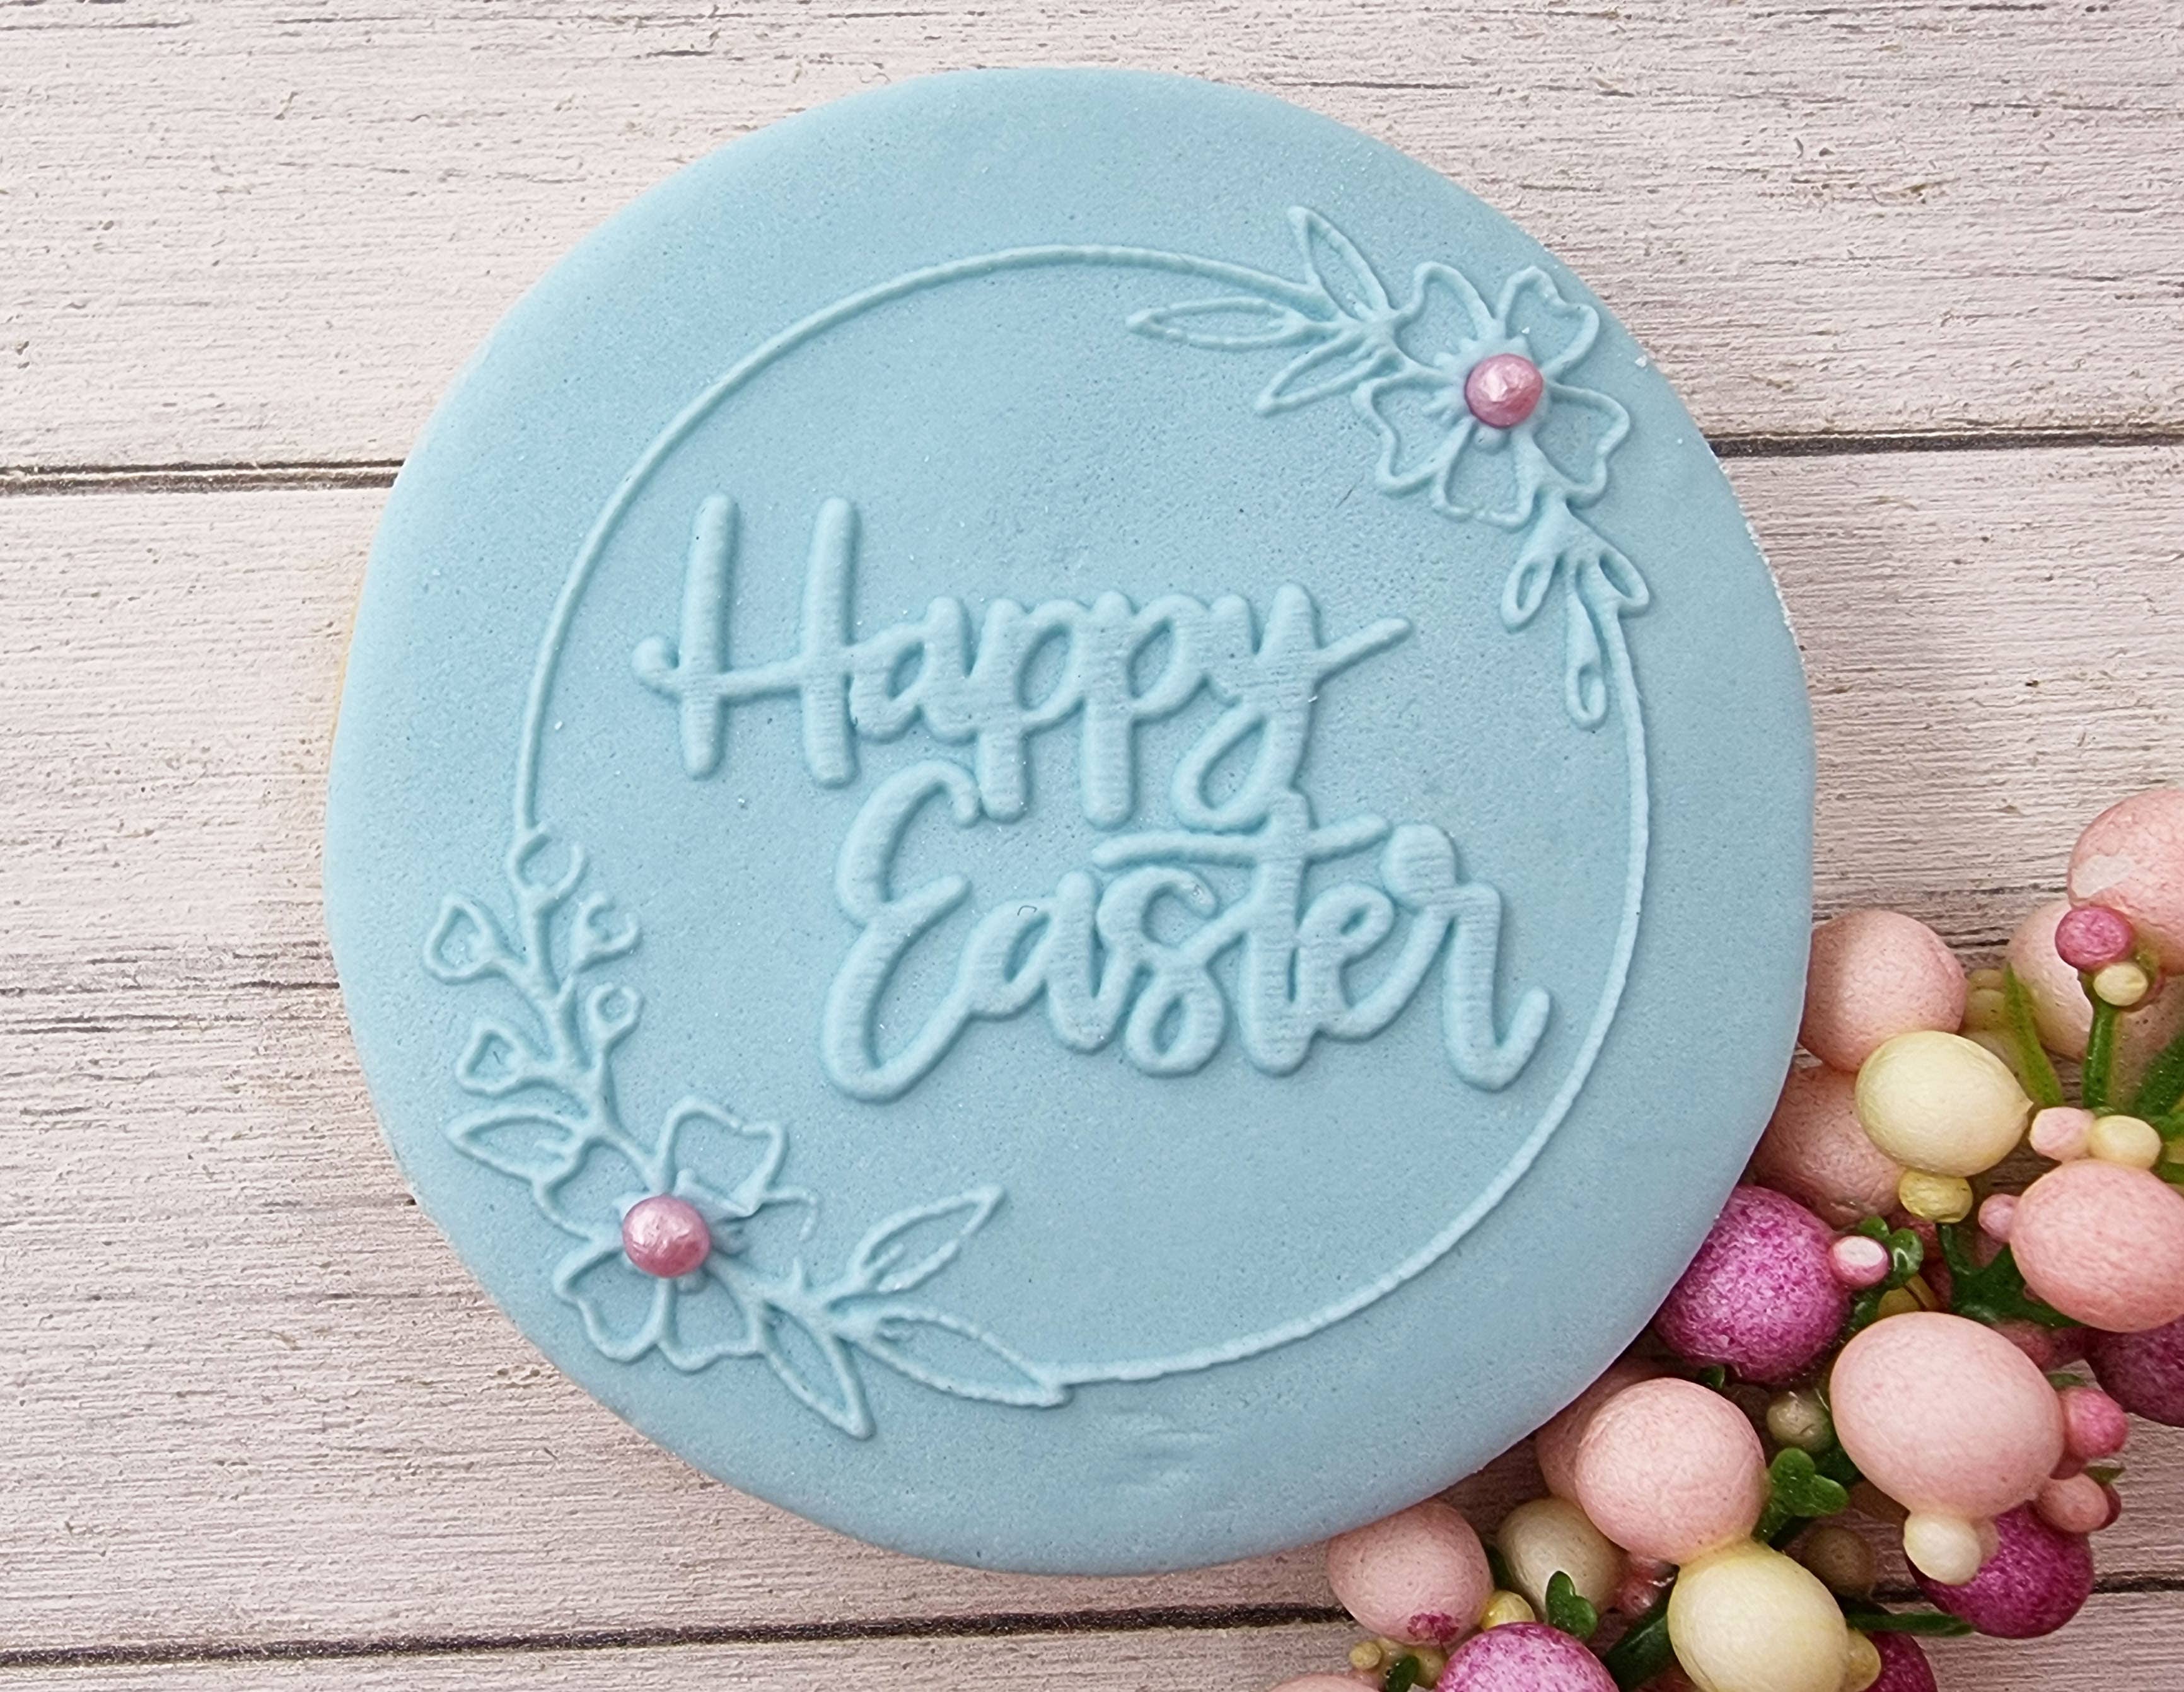 Make & Fun Happy Easter with Floral Border Fondant Embosser, Cookie Debosser